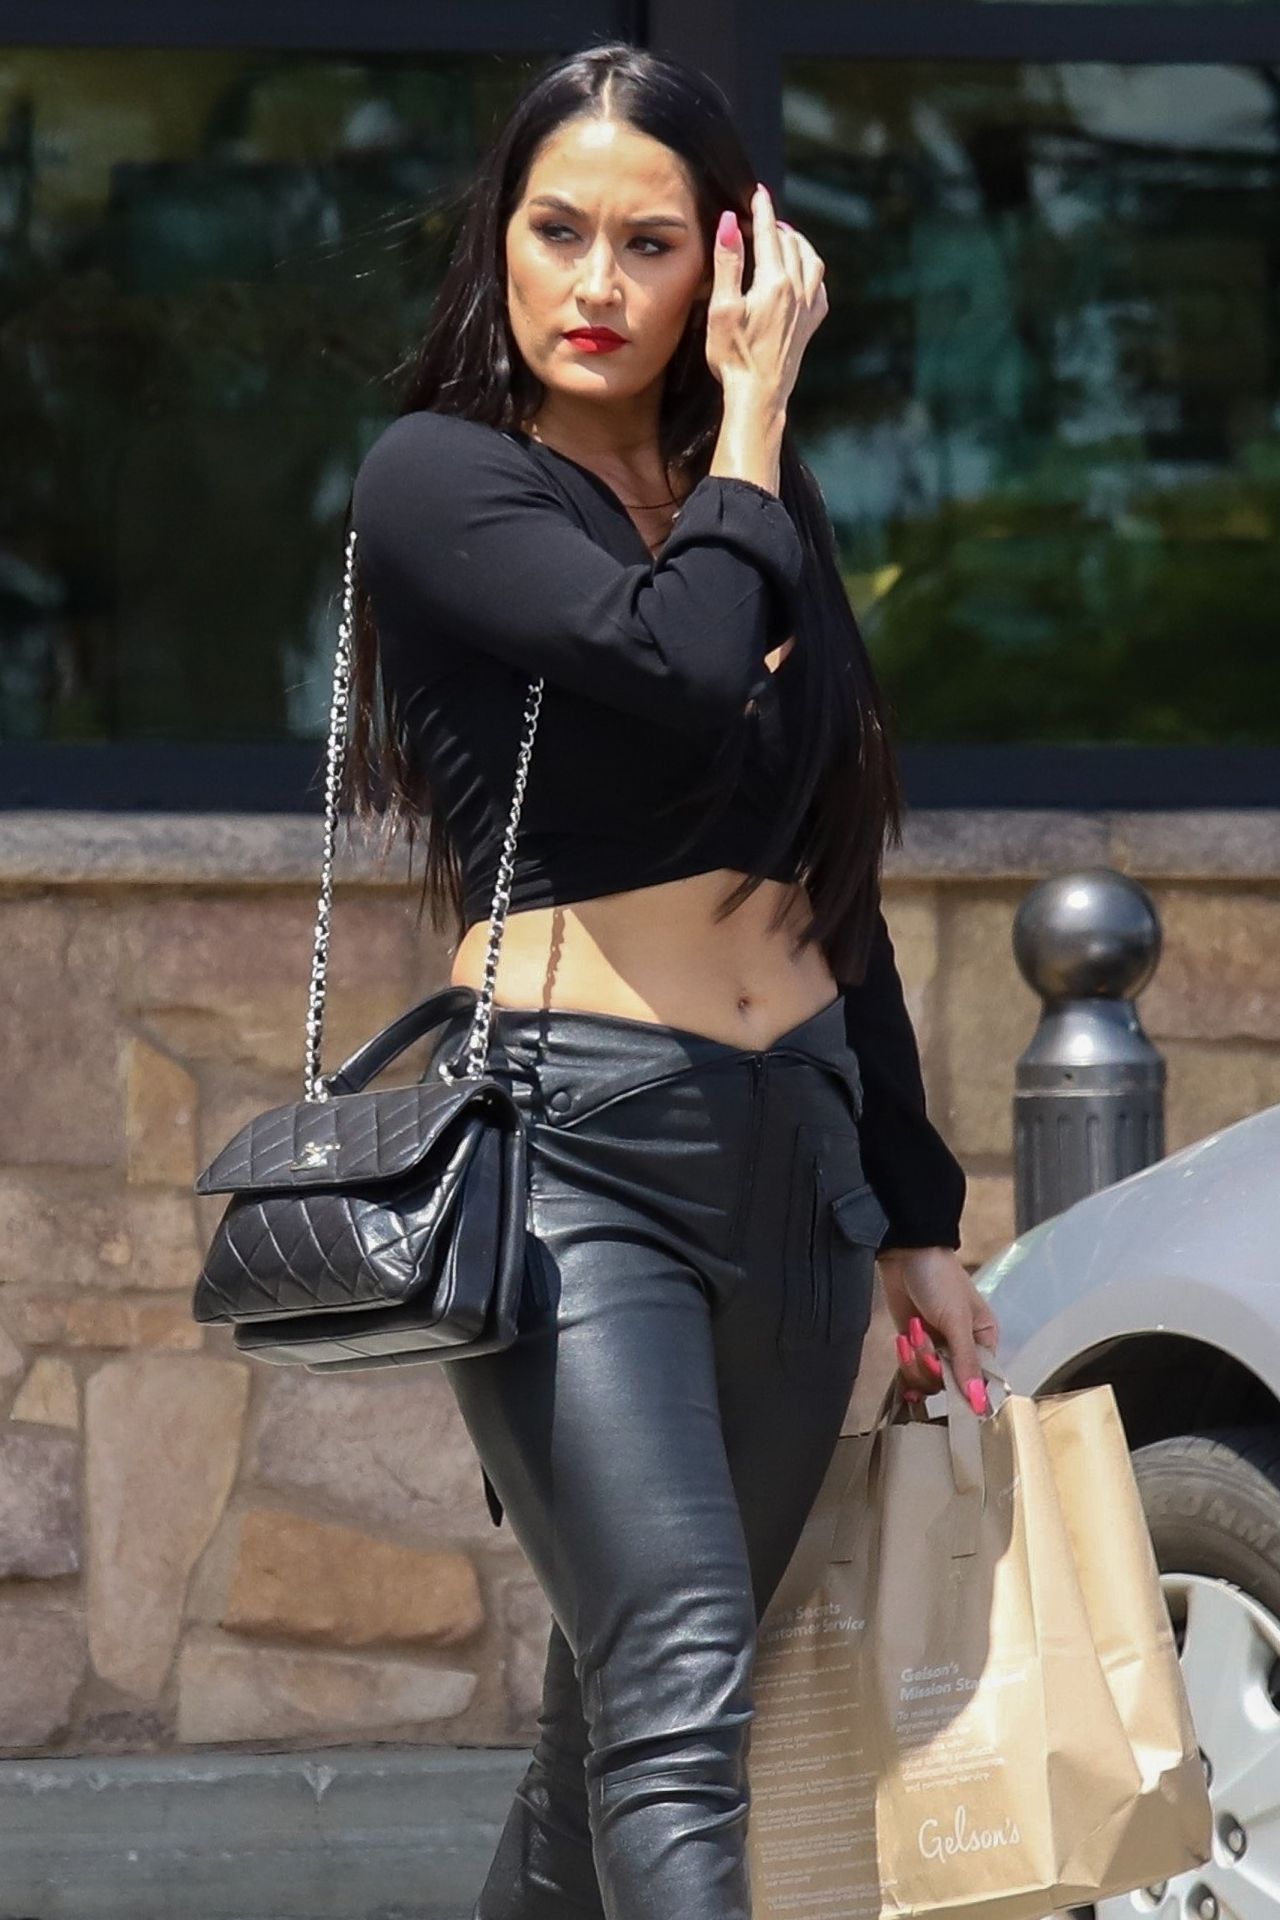 Nikki Bella Los Angeles August 5, 2019 – Star Style